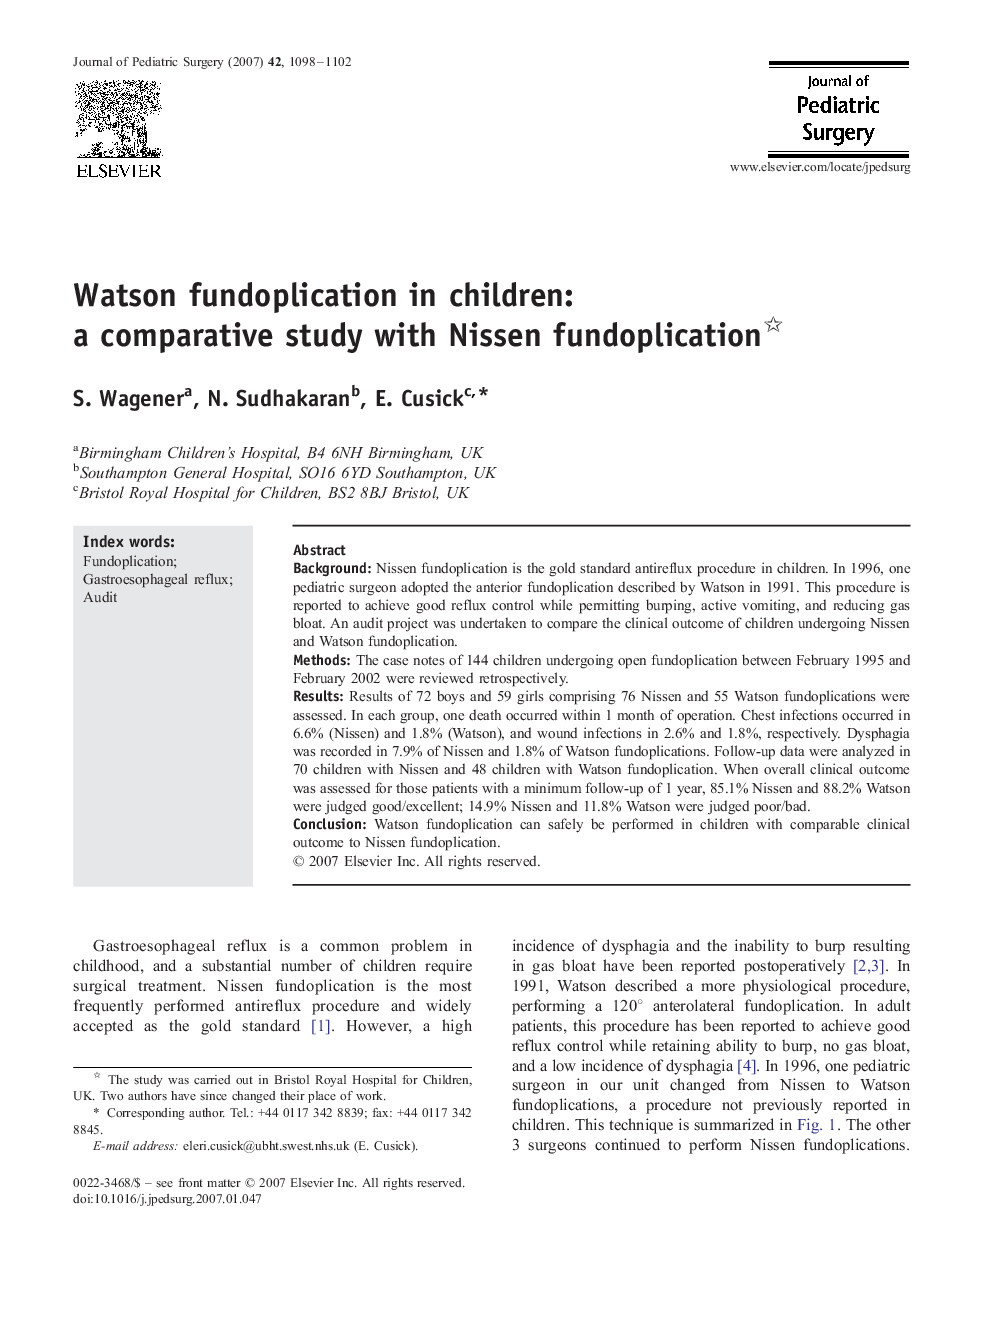 Watson fundoplication in children: a comparative study with Nissen fundoplication 